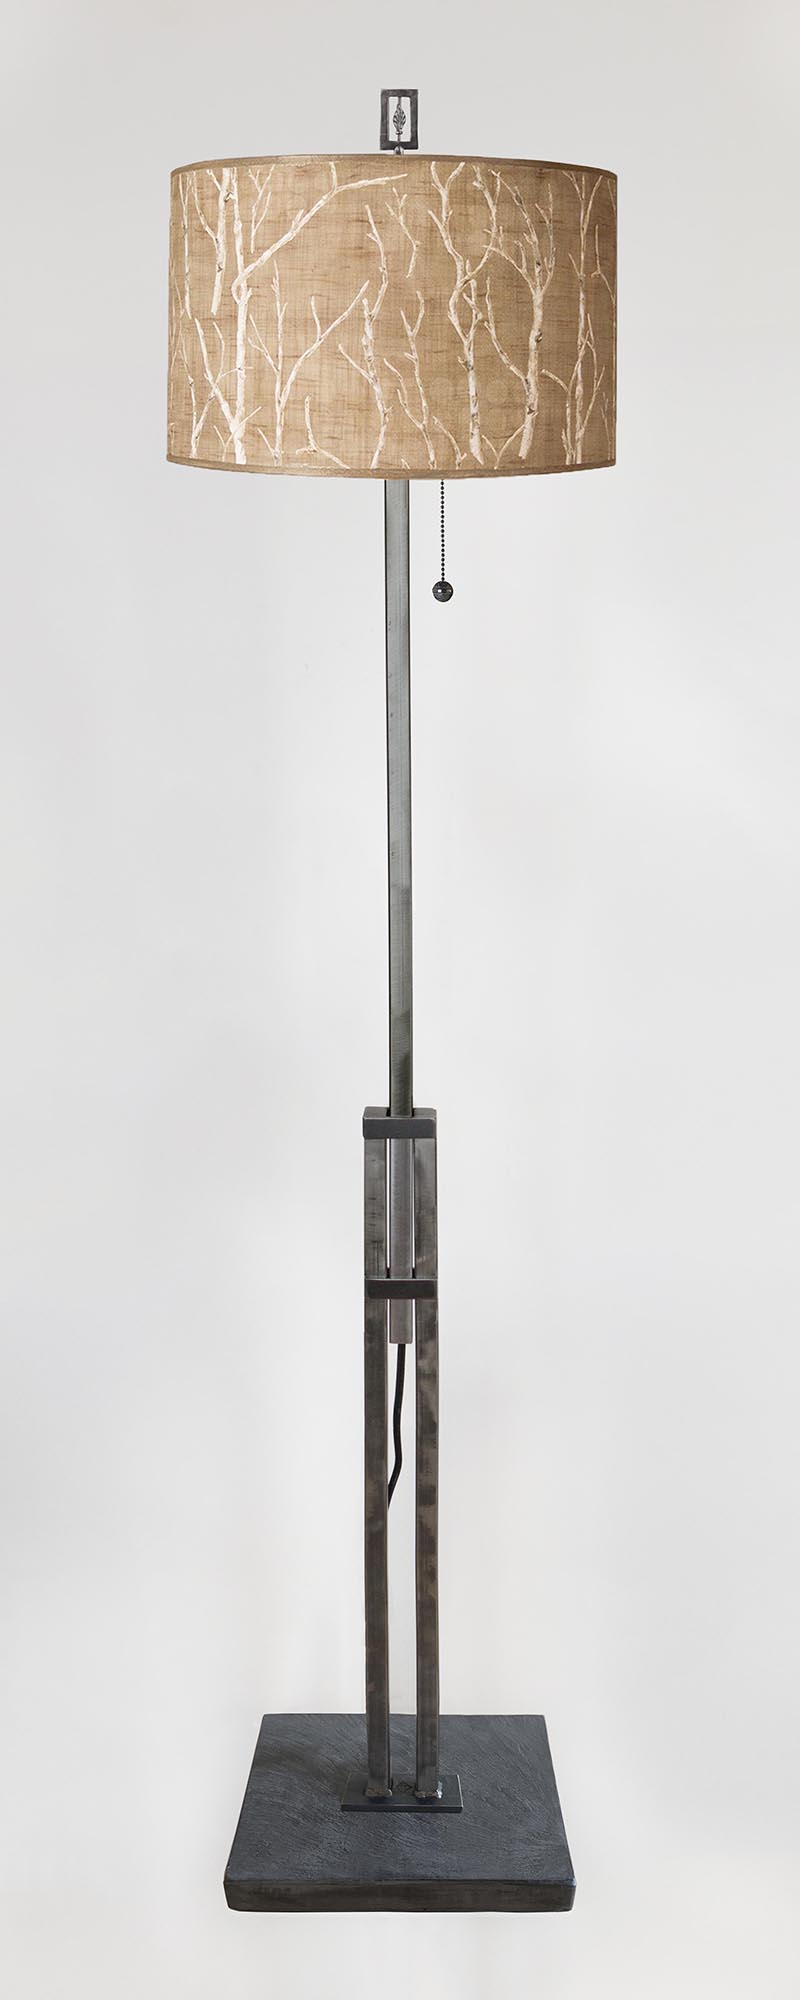 Janna Ugone & Co Floor Lamps Adjustable-Height Steel Floor Lamp with Large Drum Shade in Twigs